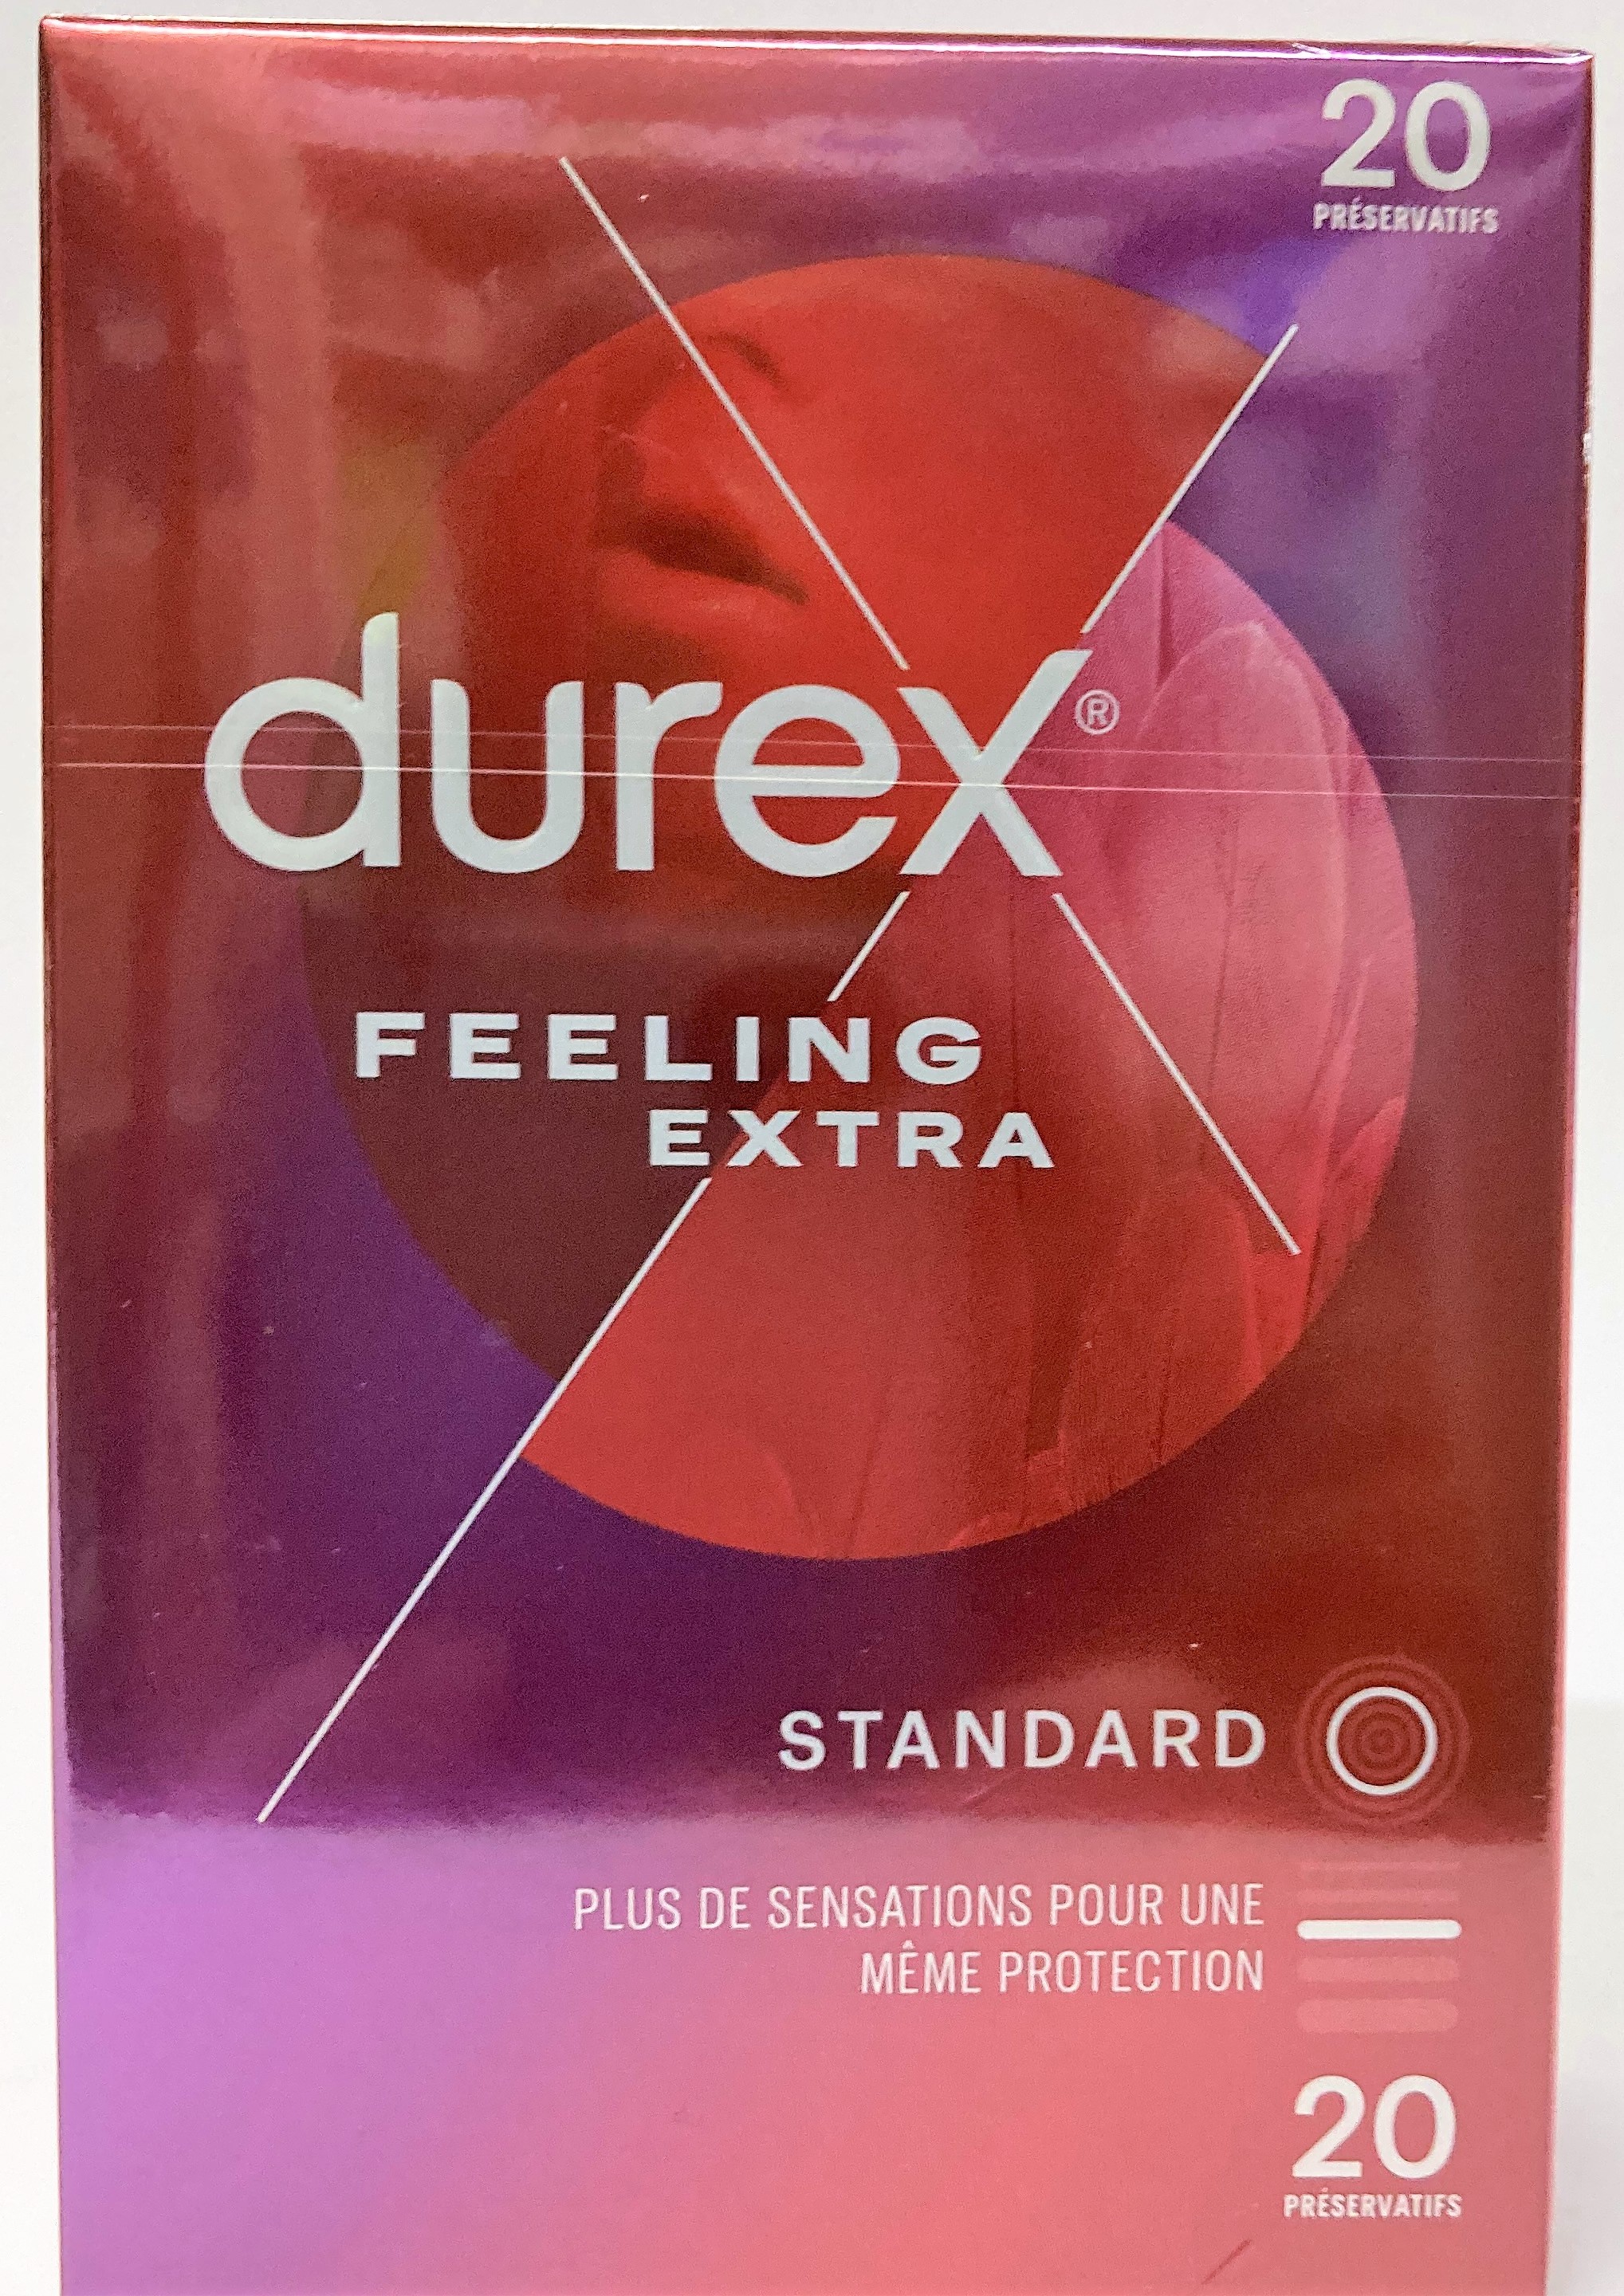 Durex Essential 10 Préservatifs - PharmaJ